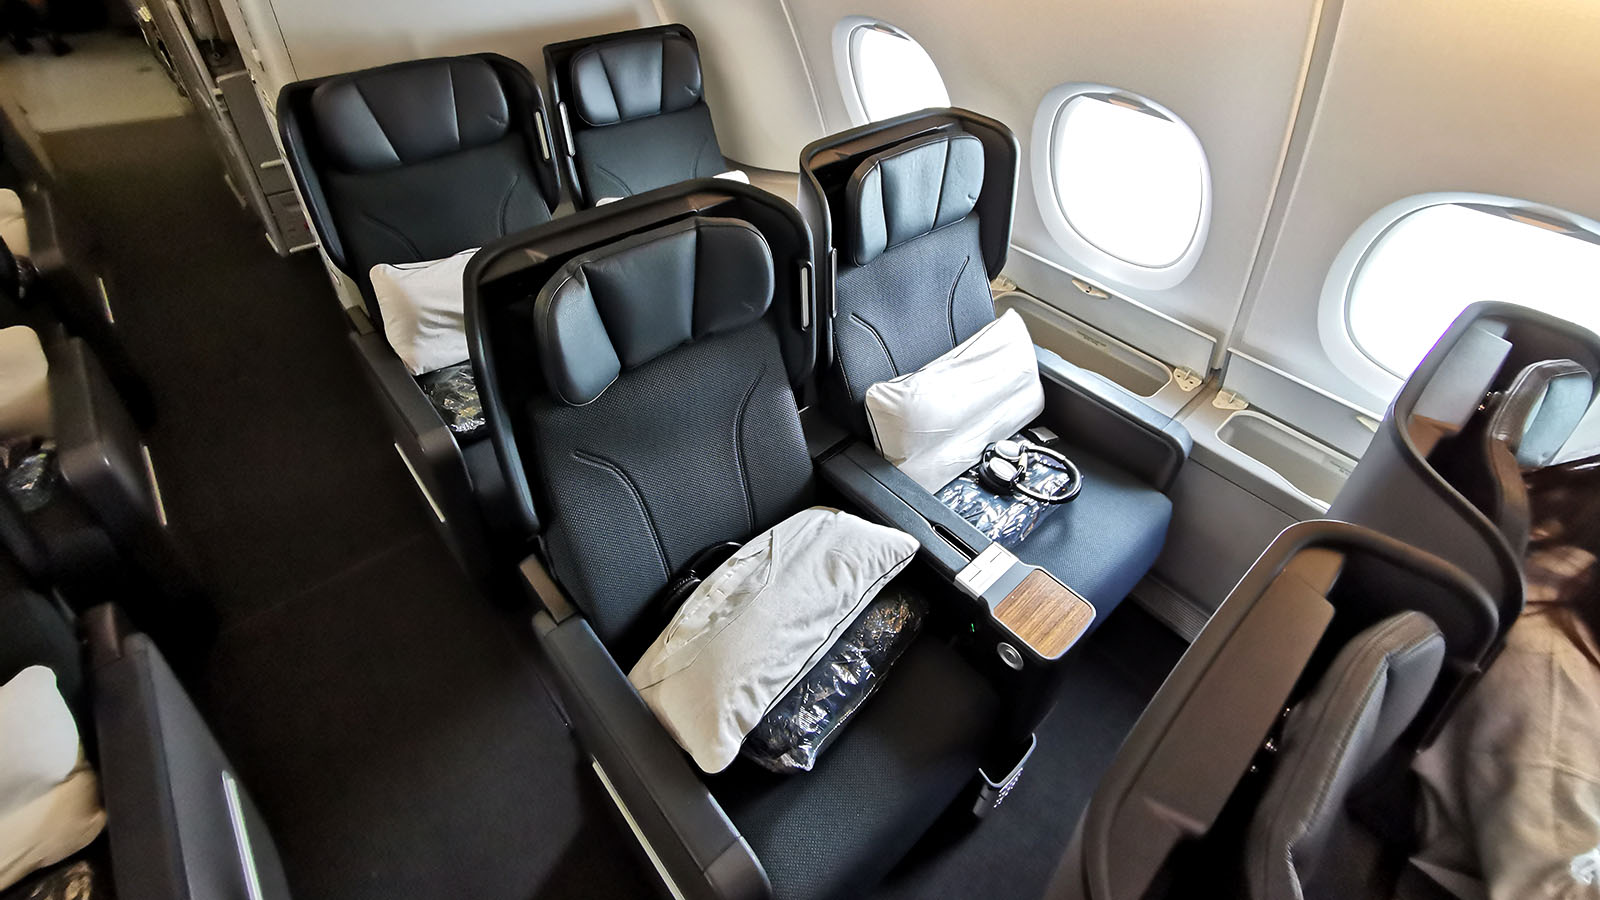 Two seats in Qantas' Airbus A380 Premium Economy